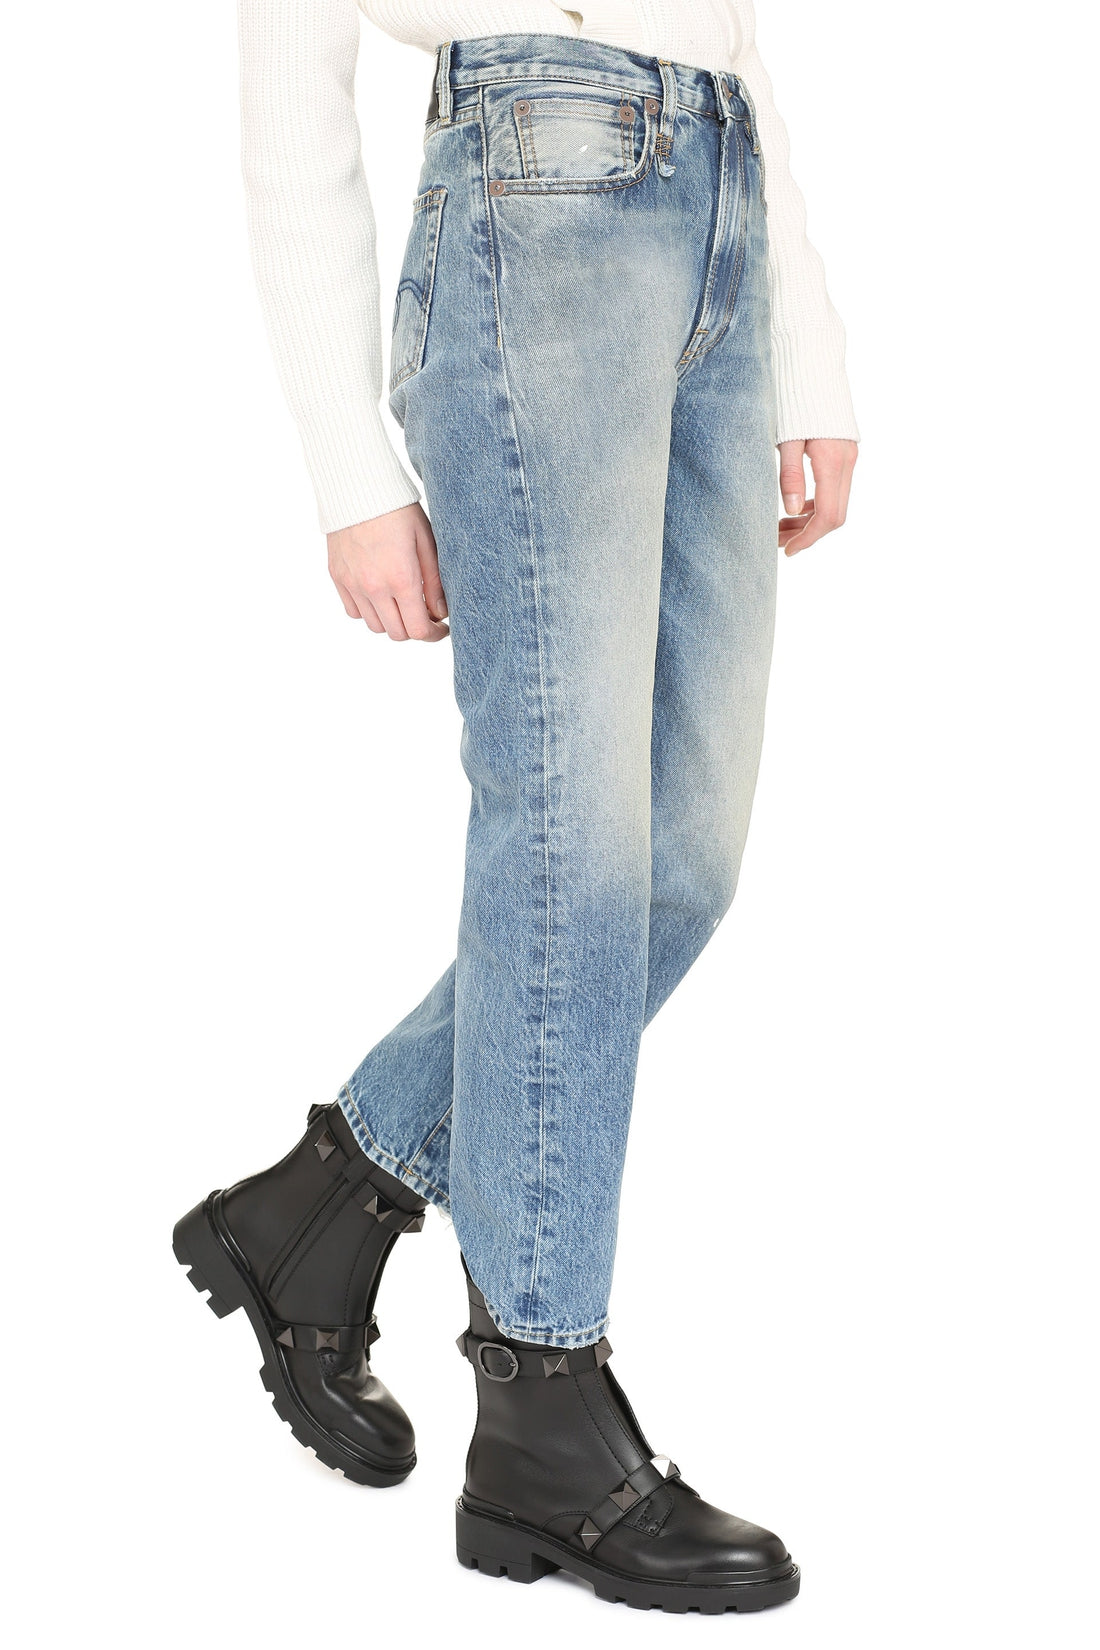 R13-OUTLET-SALE-Courtney 5-pocket jeans-ARCHIVIST